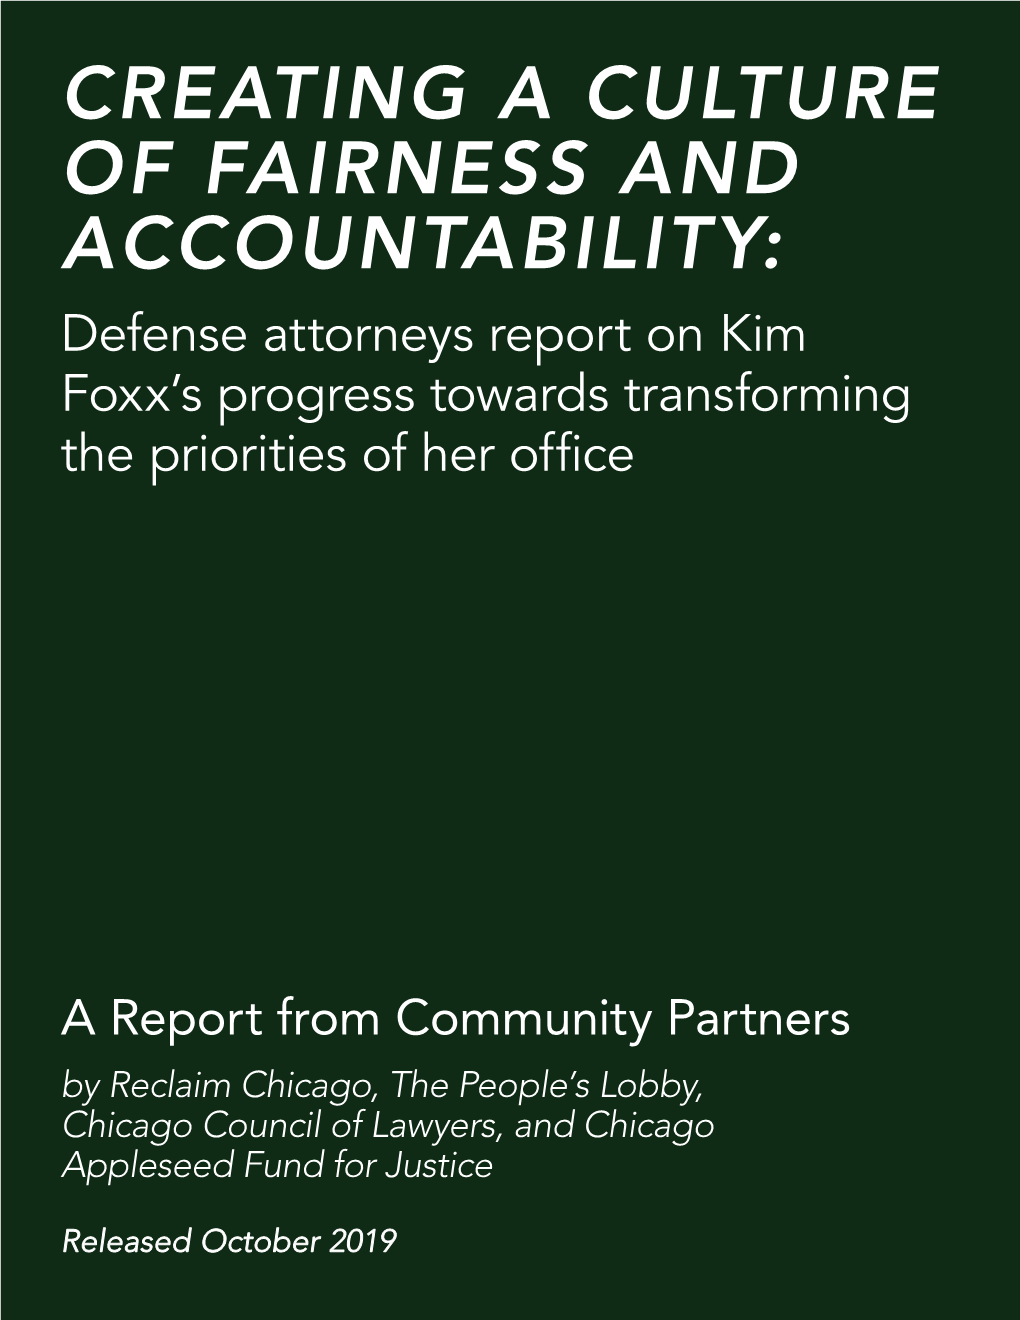 Defense Attorneys Report of Kim Foxx's